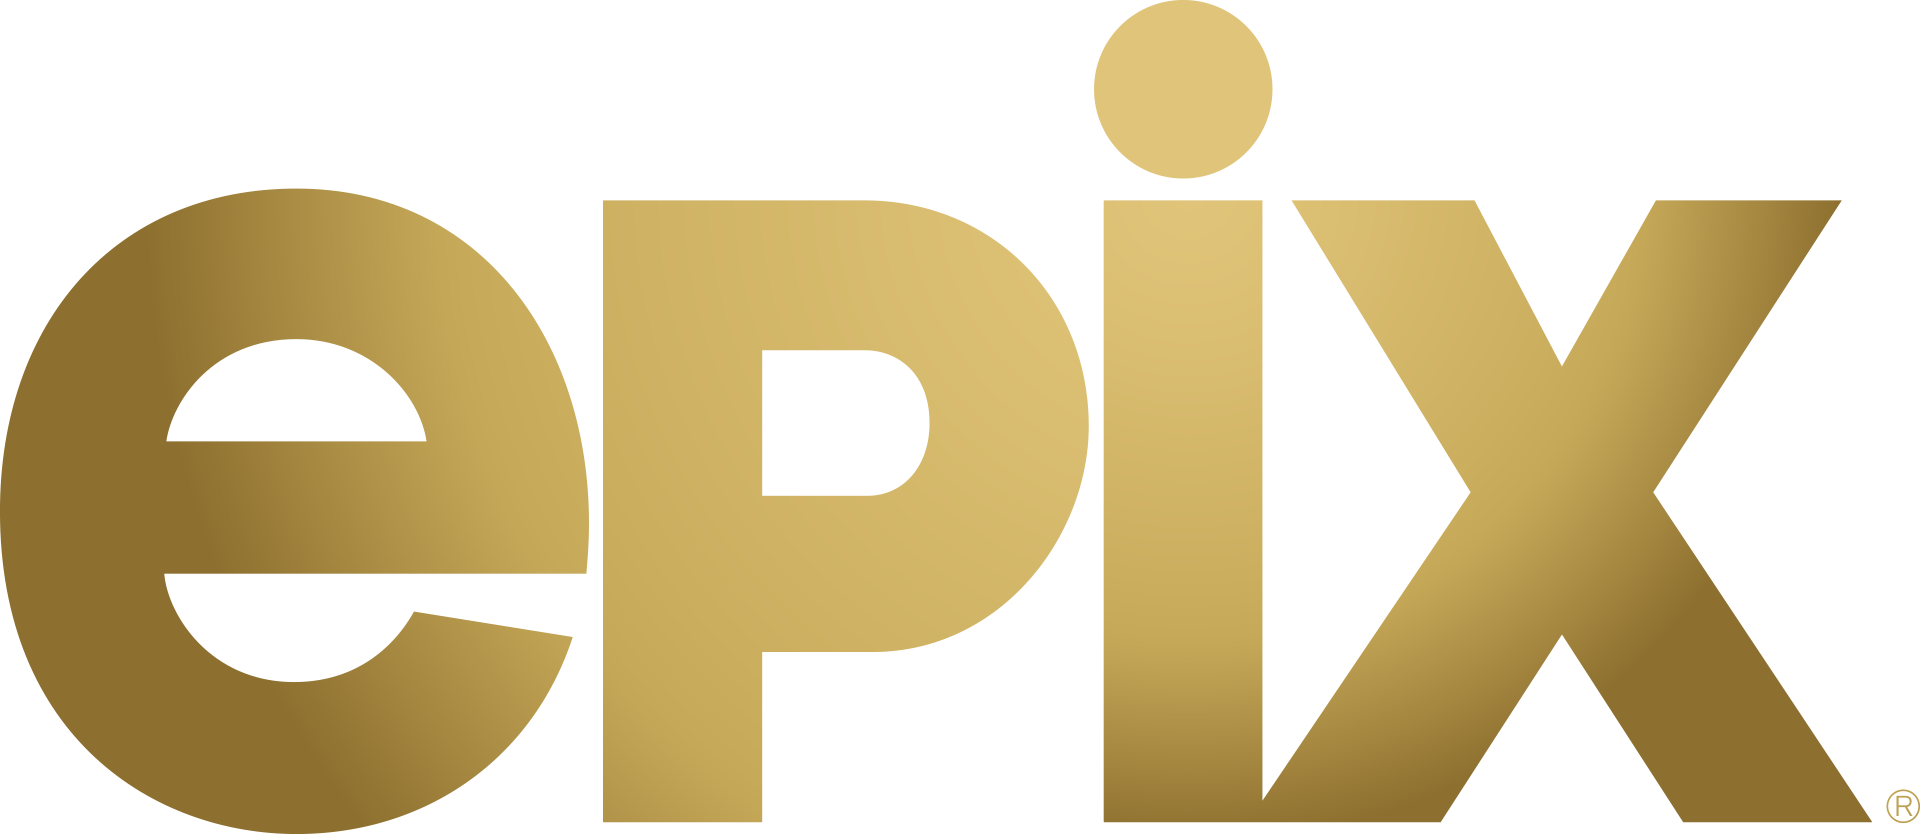 Epix TV Channel | Premium Channel | DISH Satellite TV